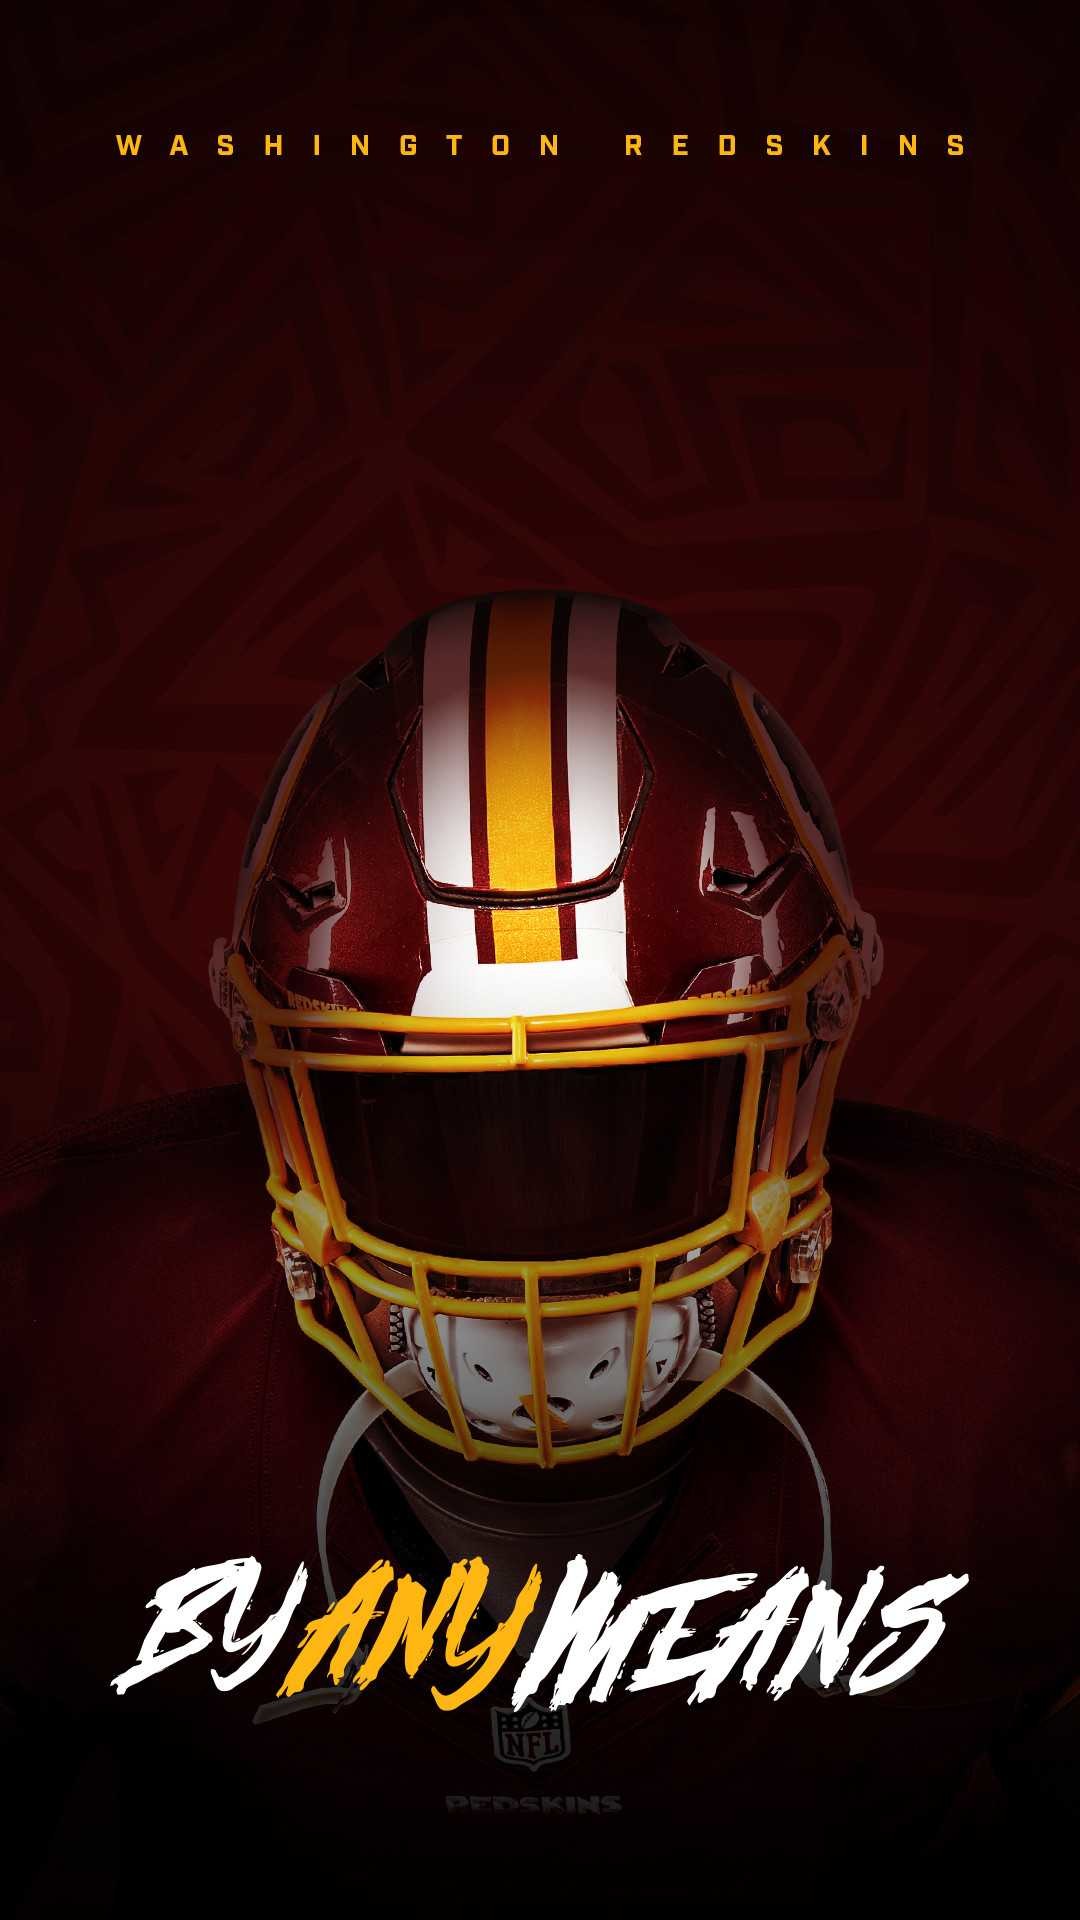 Washington Redskins Wallpaper HD Pics Background